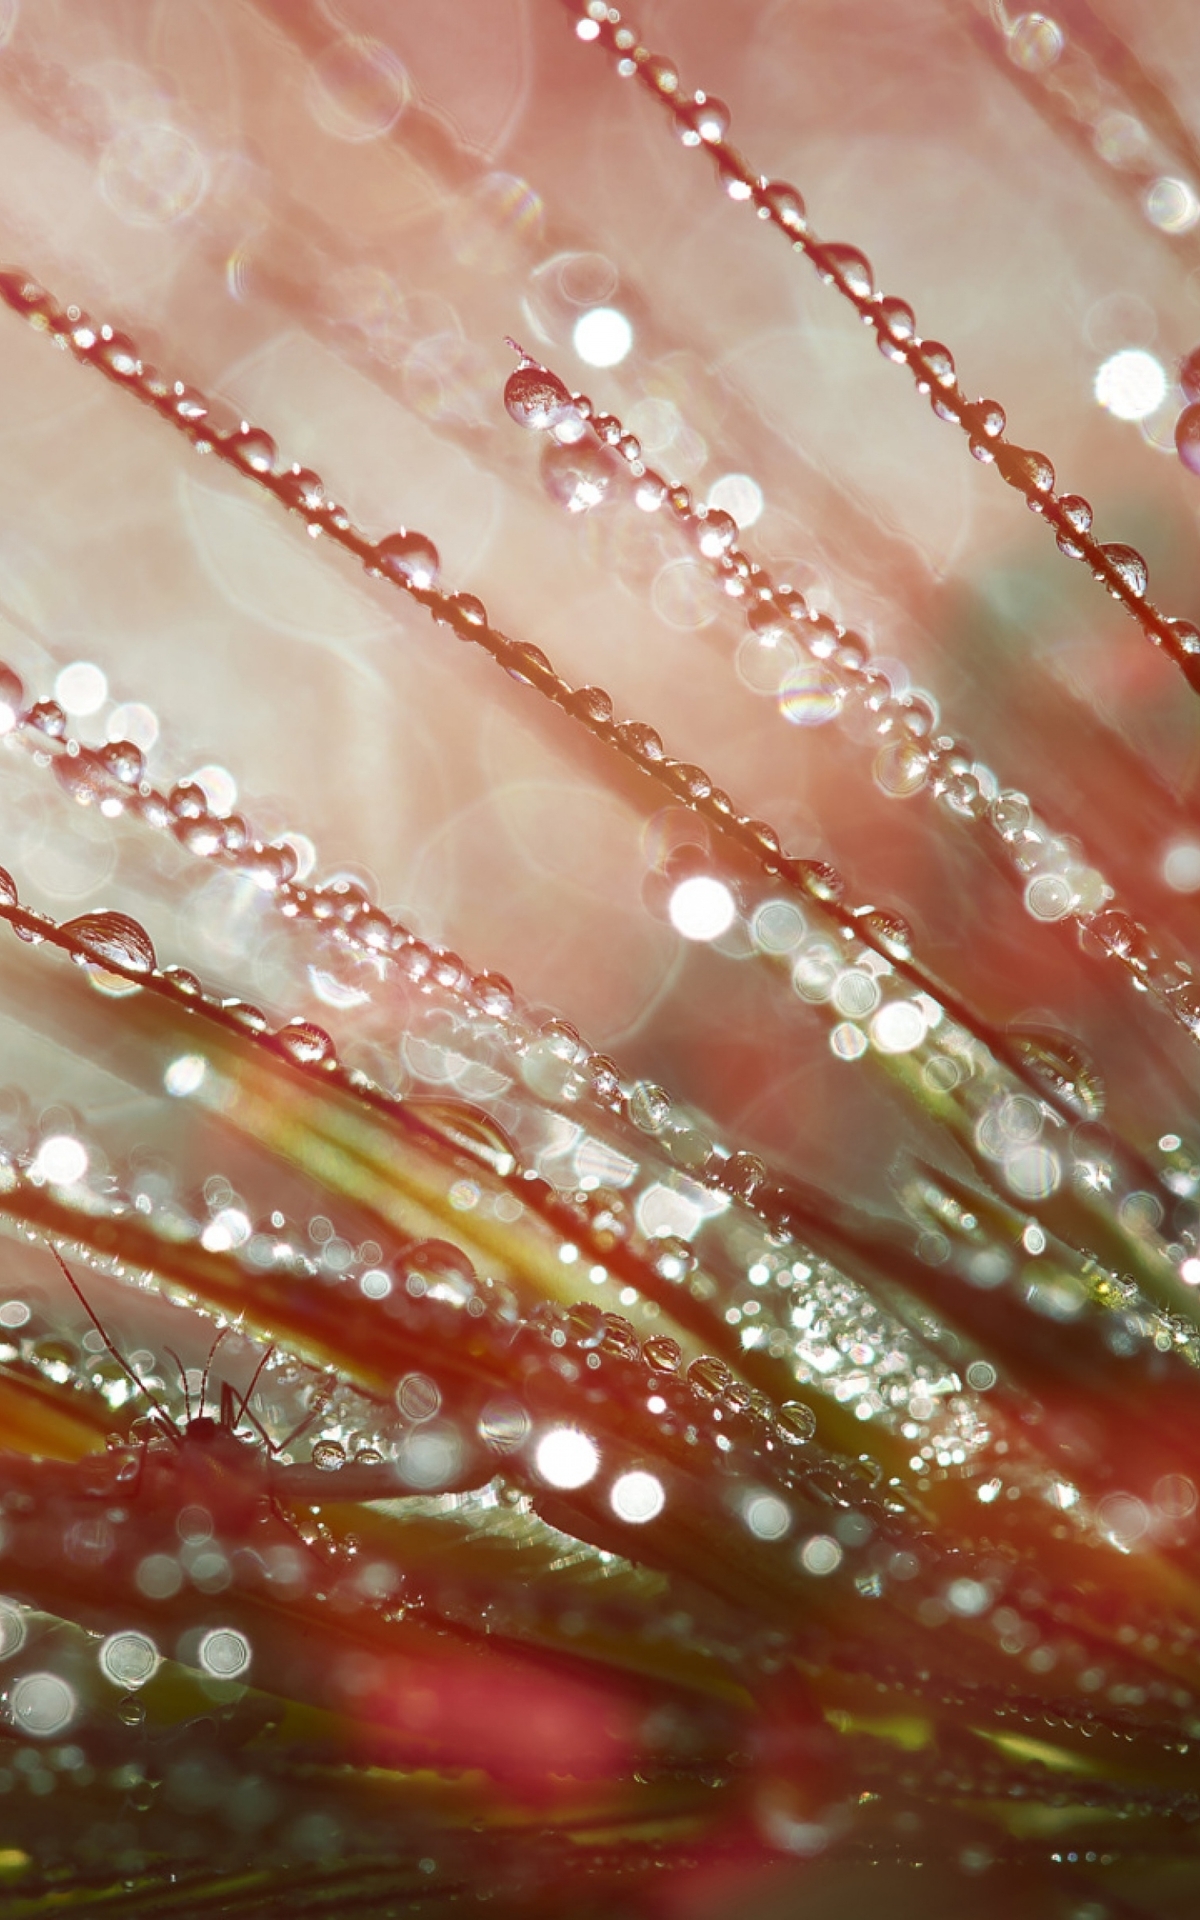 Image: Grass, dew, beetle, drops, flare, flicker